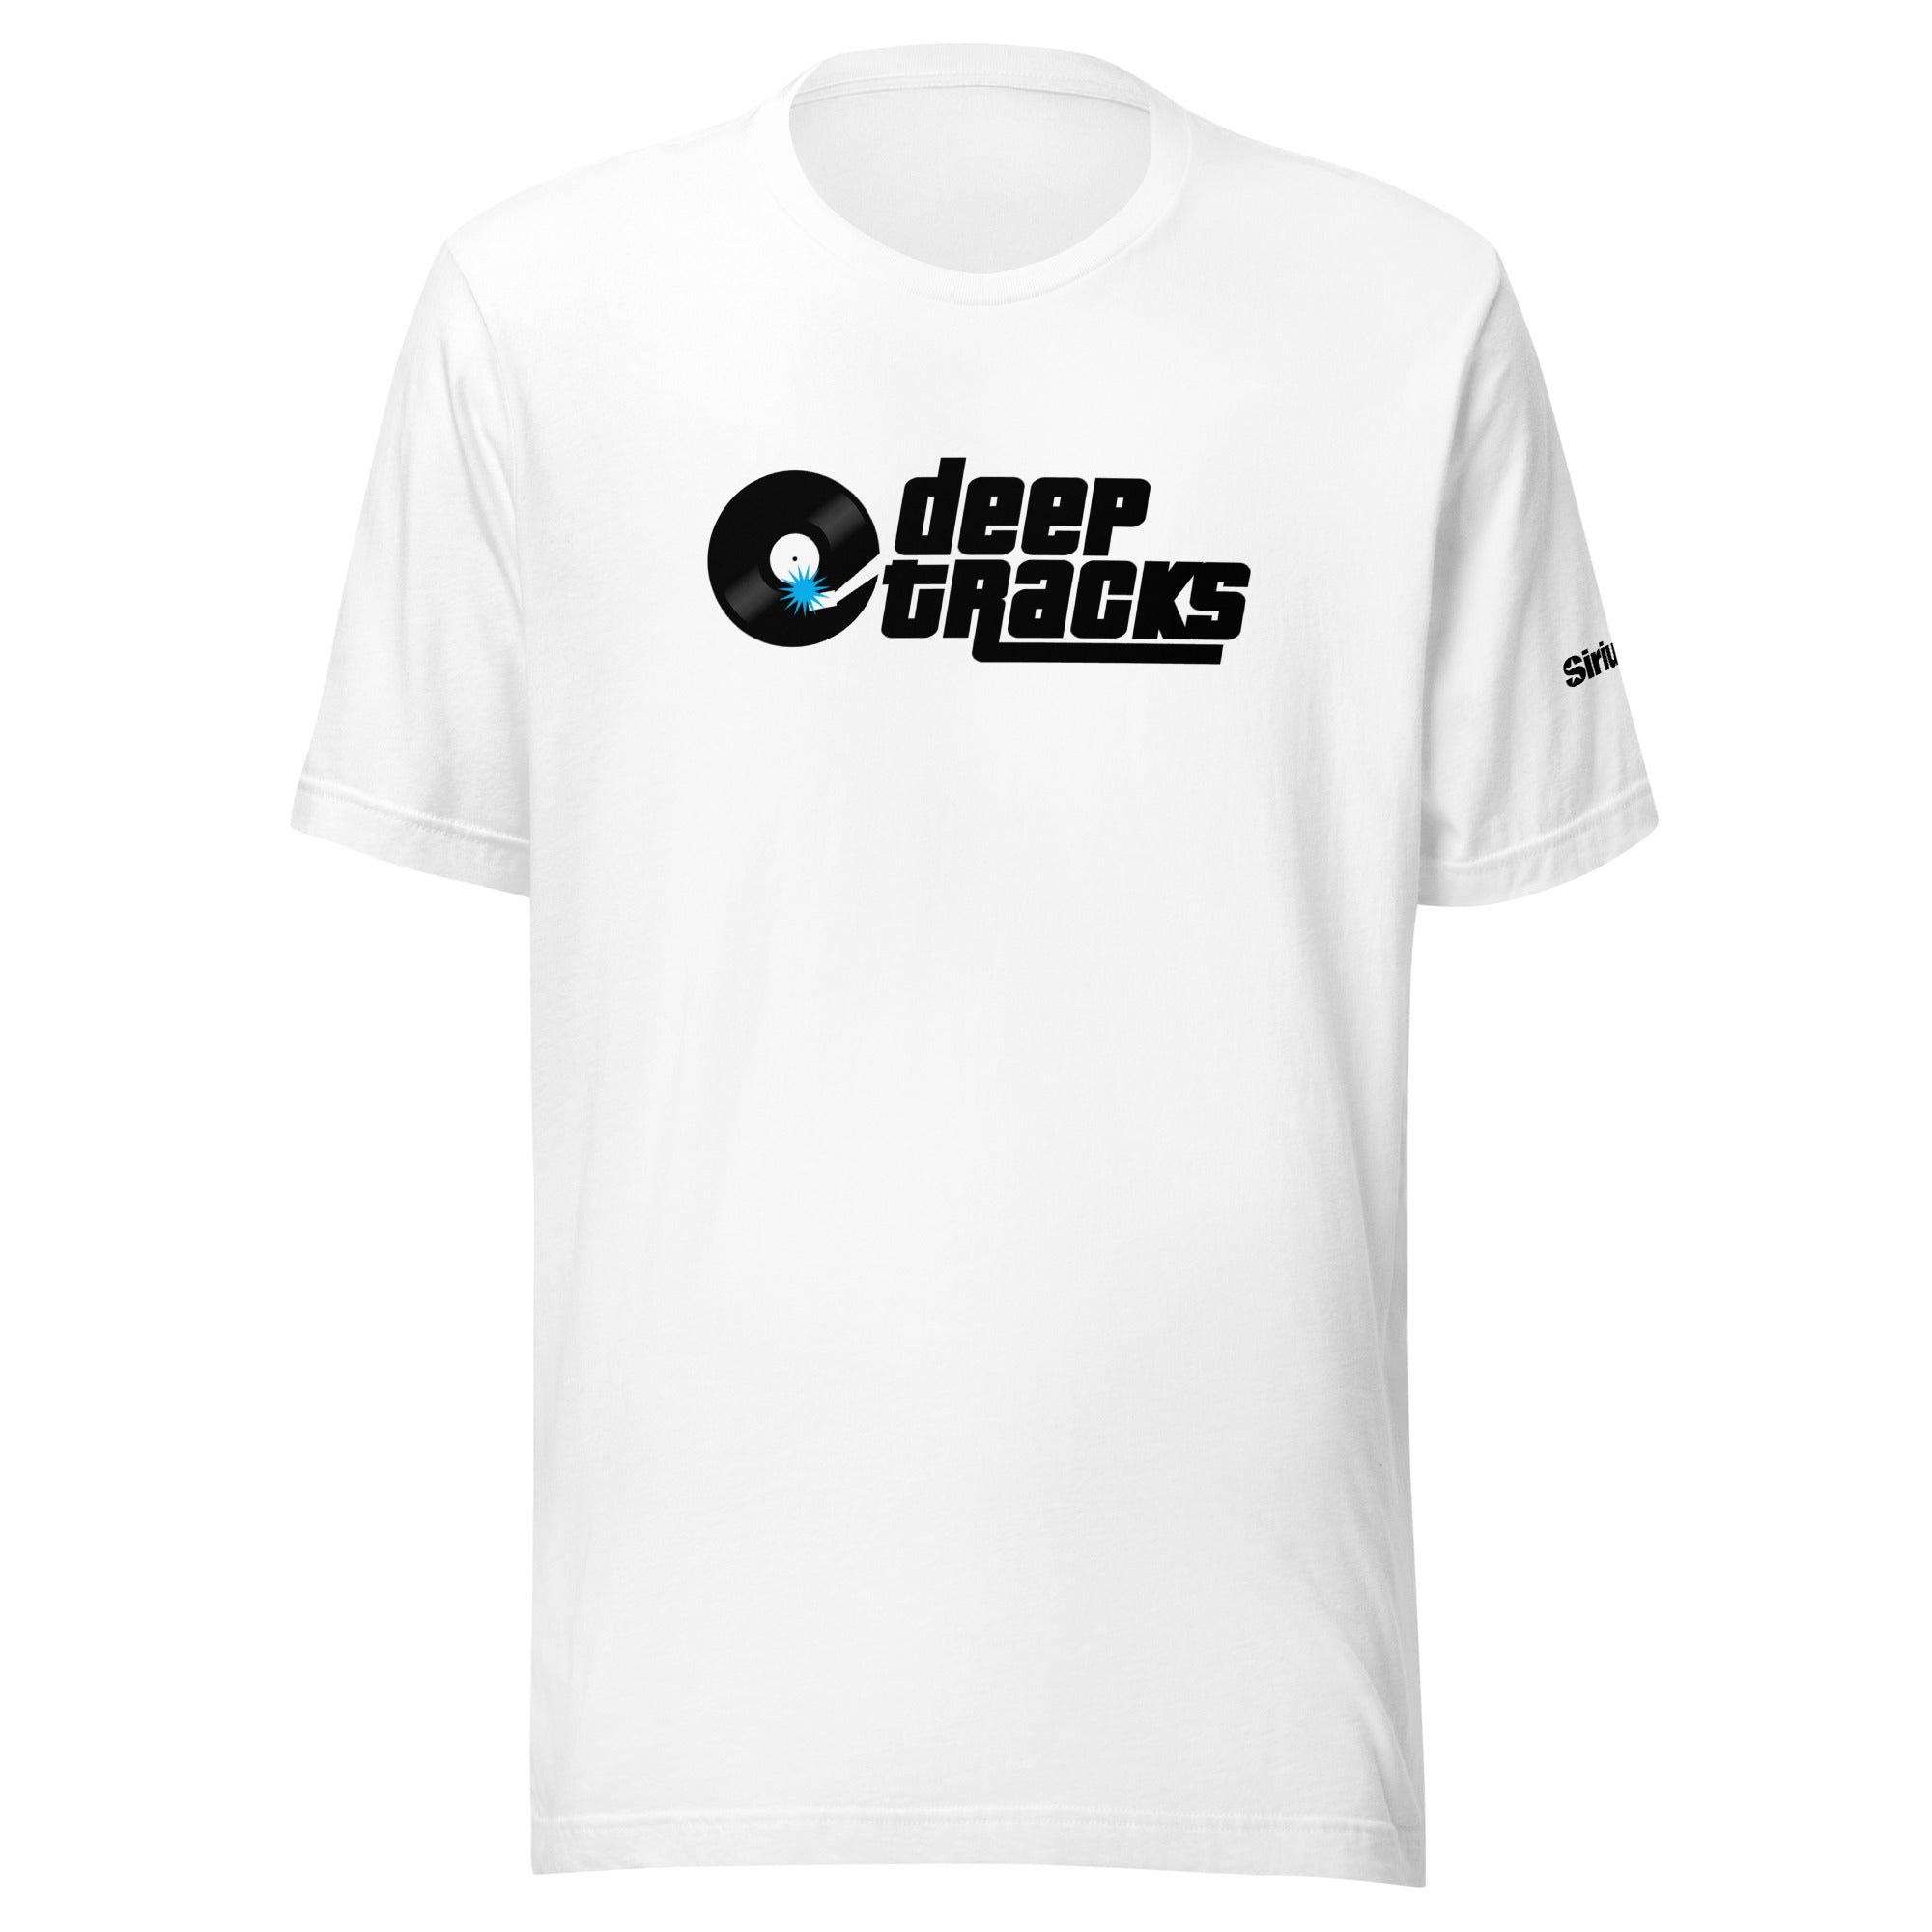 Deep Tracks: T-shirt (White)